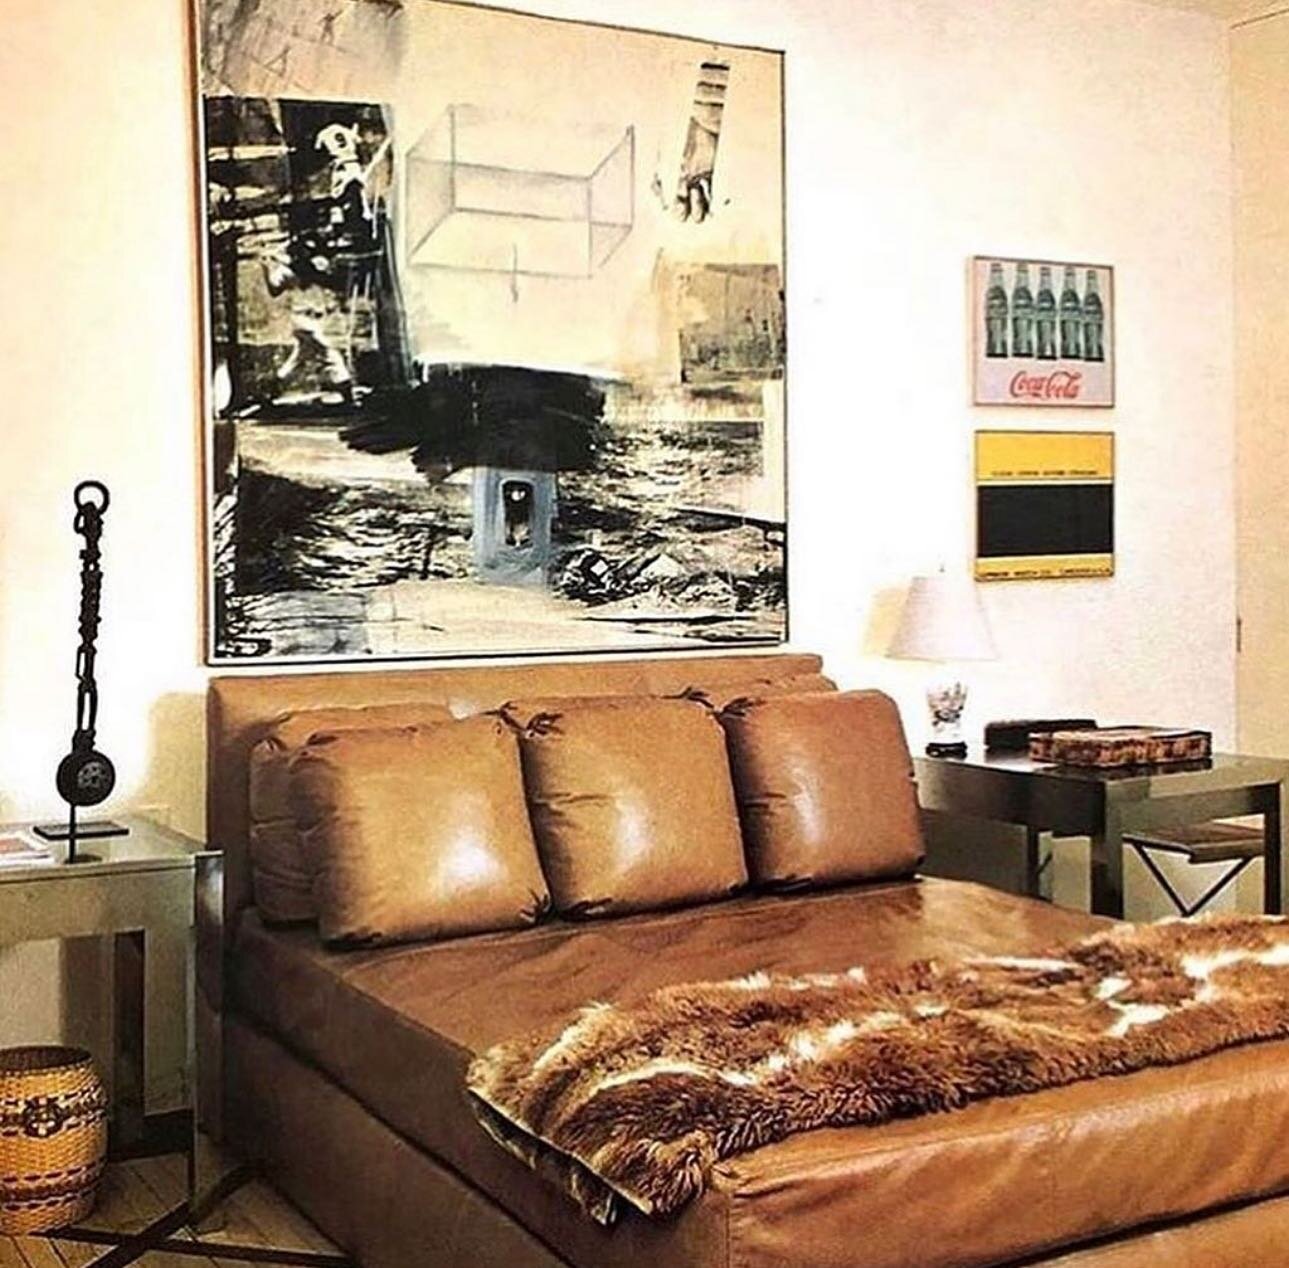 A little leather. #ThomasBritt&rsquo;s NYC apartment.

#thomasbrittinteriors #70sinteriors #designinspiration